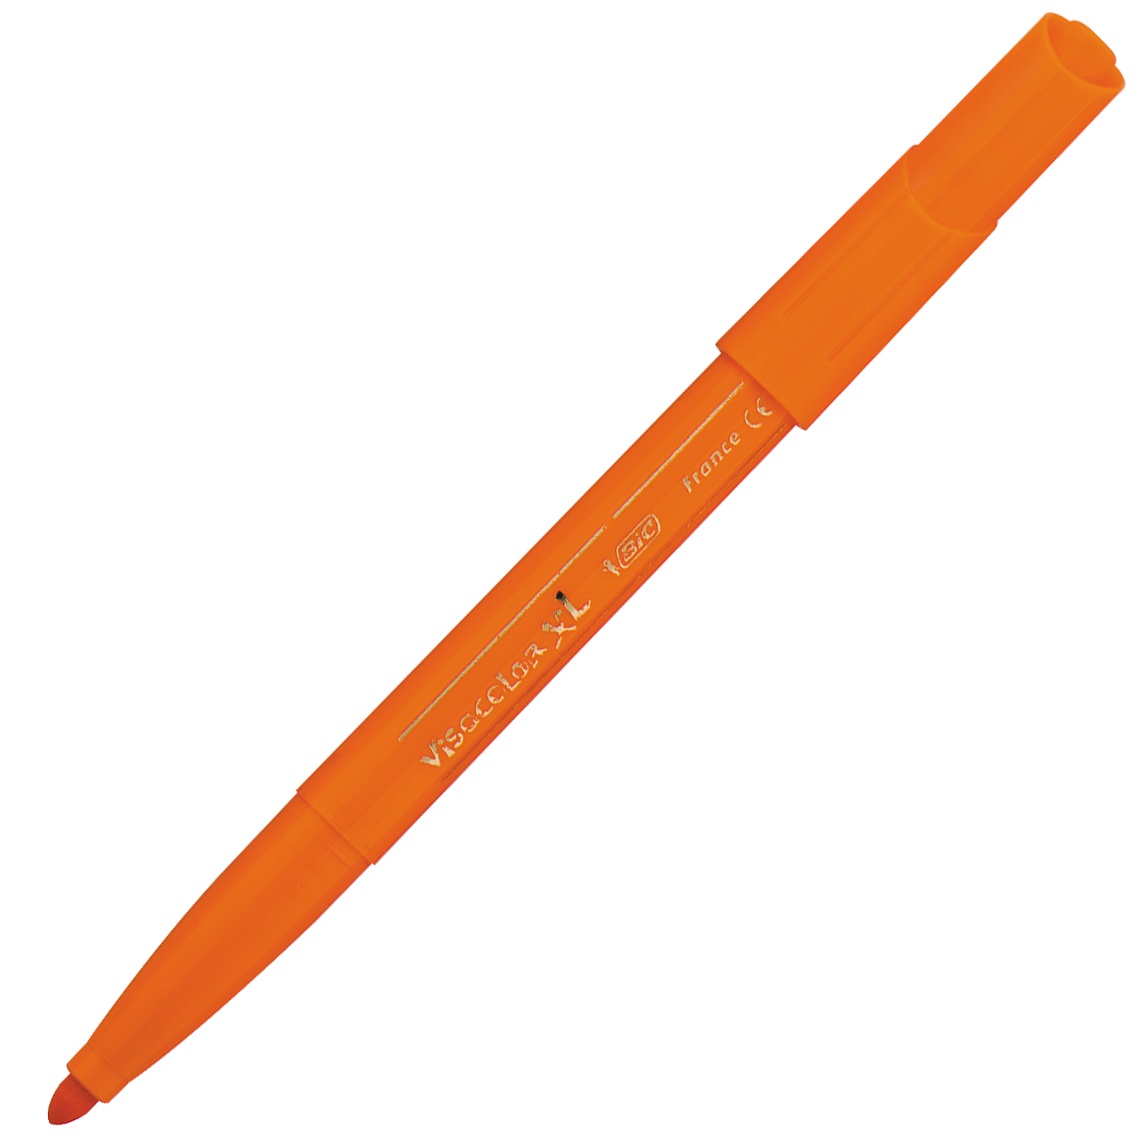 Kids Visacolor XL Fiber-tip pens 24-set i gruppen Kids / Barnepenner / Tusjer for barn hos Pen Store (100250)